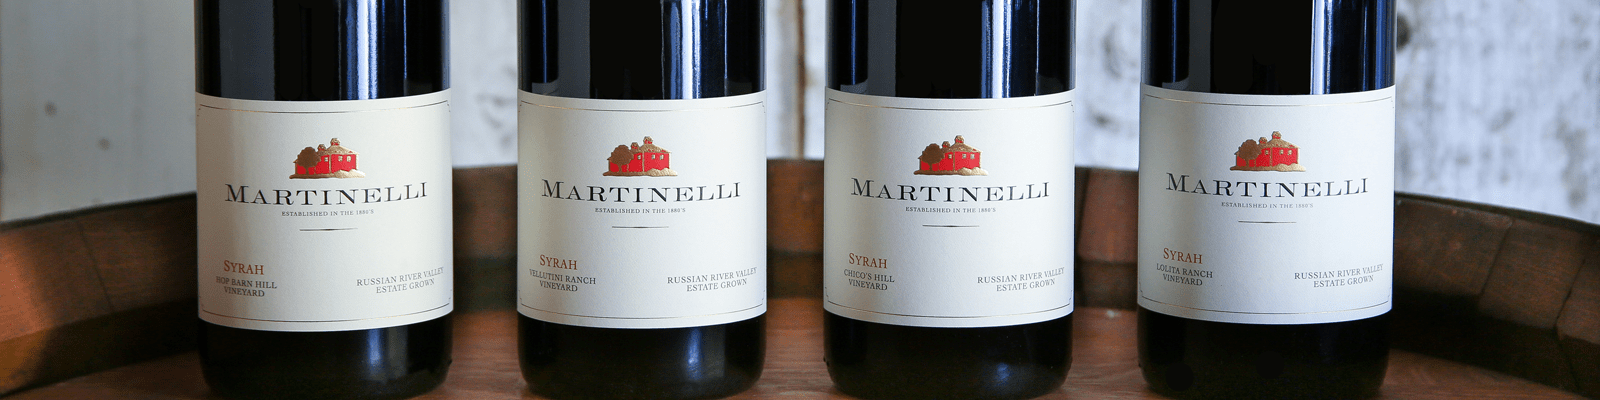 Four Martinelli Syrah wine bottles